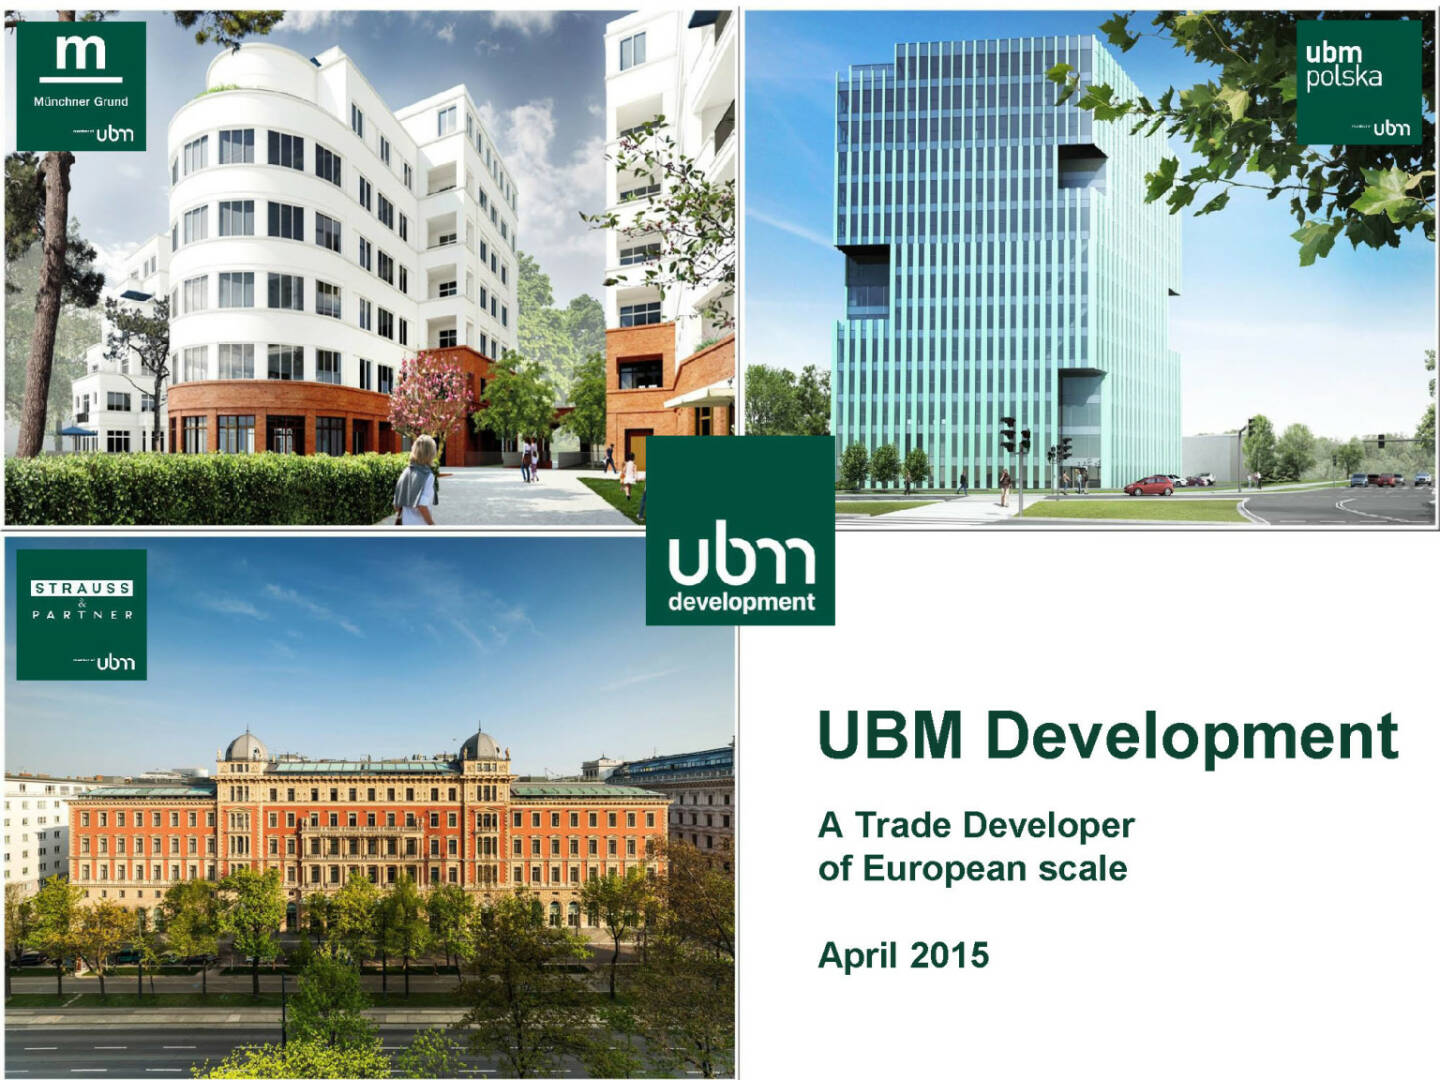 UBM Development - A Trade Developer of European scale